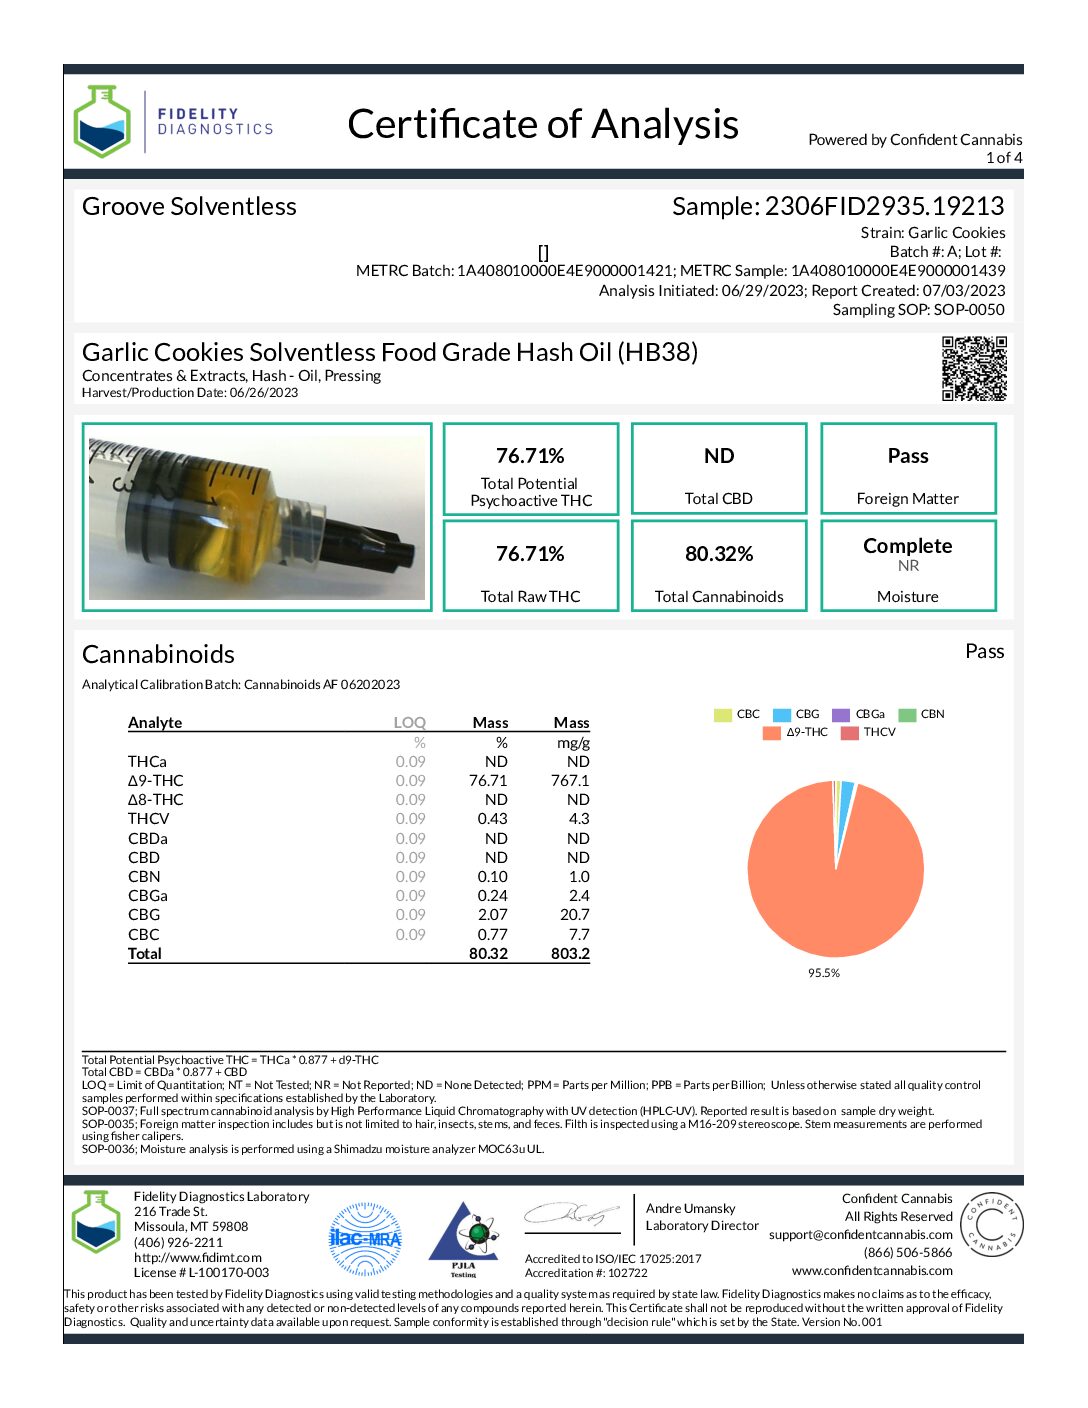 https://groovesolventless.com/wp-content/uploads/2023/07/Garlic-Cookies-Solventless-Food-Grade-Hash-Oil-HB38-pdf.jpg